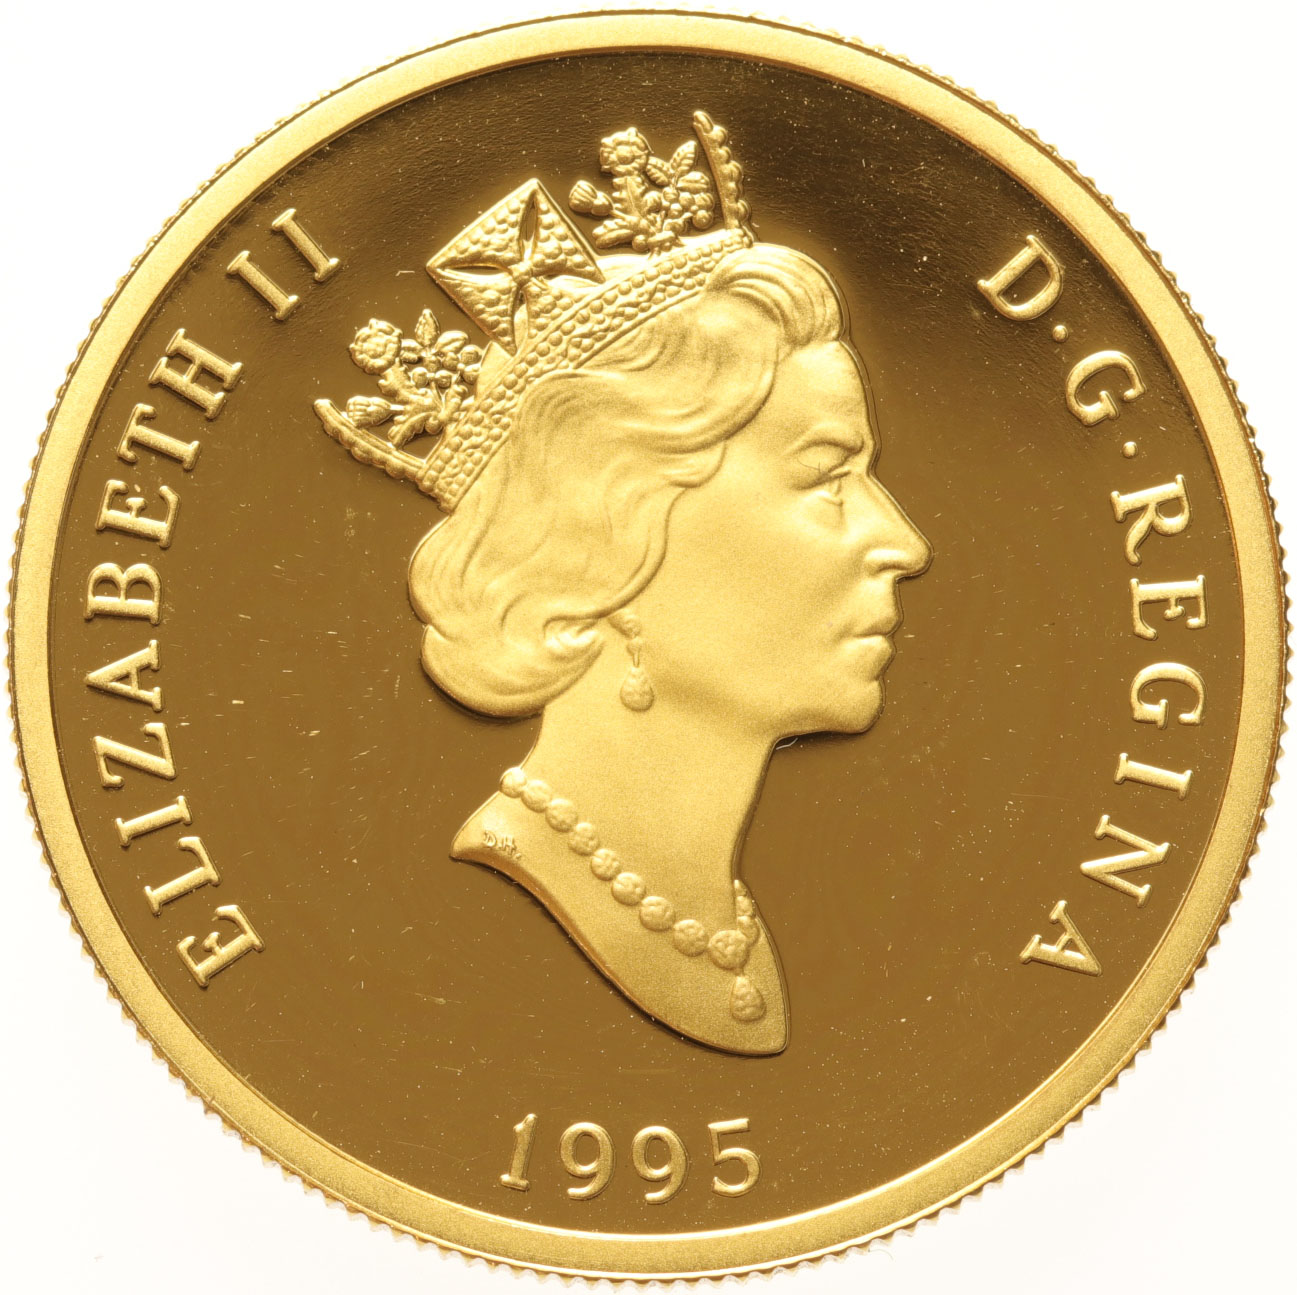 Canada 200 dollars 1995